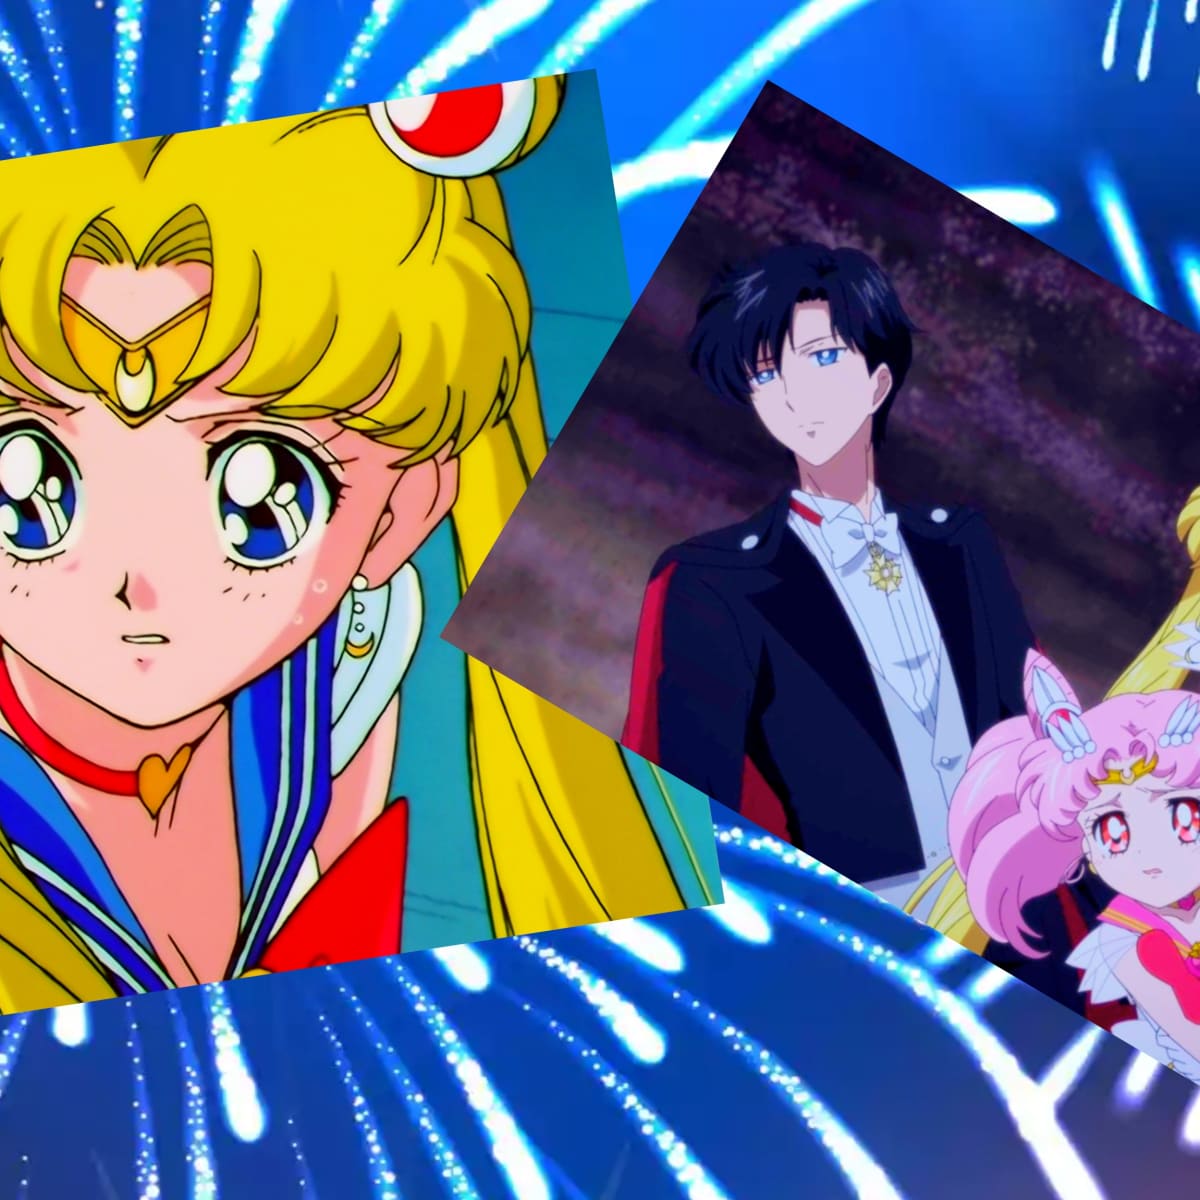 Wednesday Fan Evokes Vintage Sailor Moon With Anime-Style Art